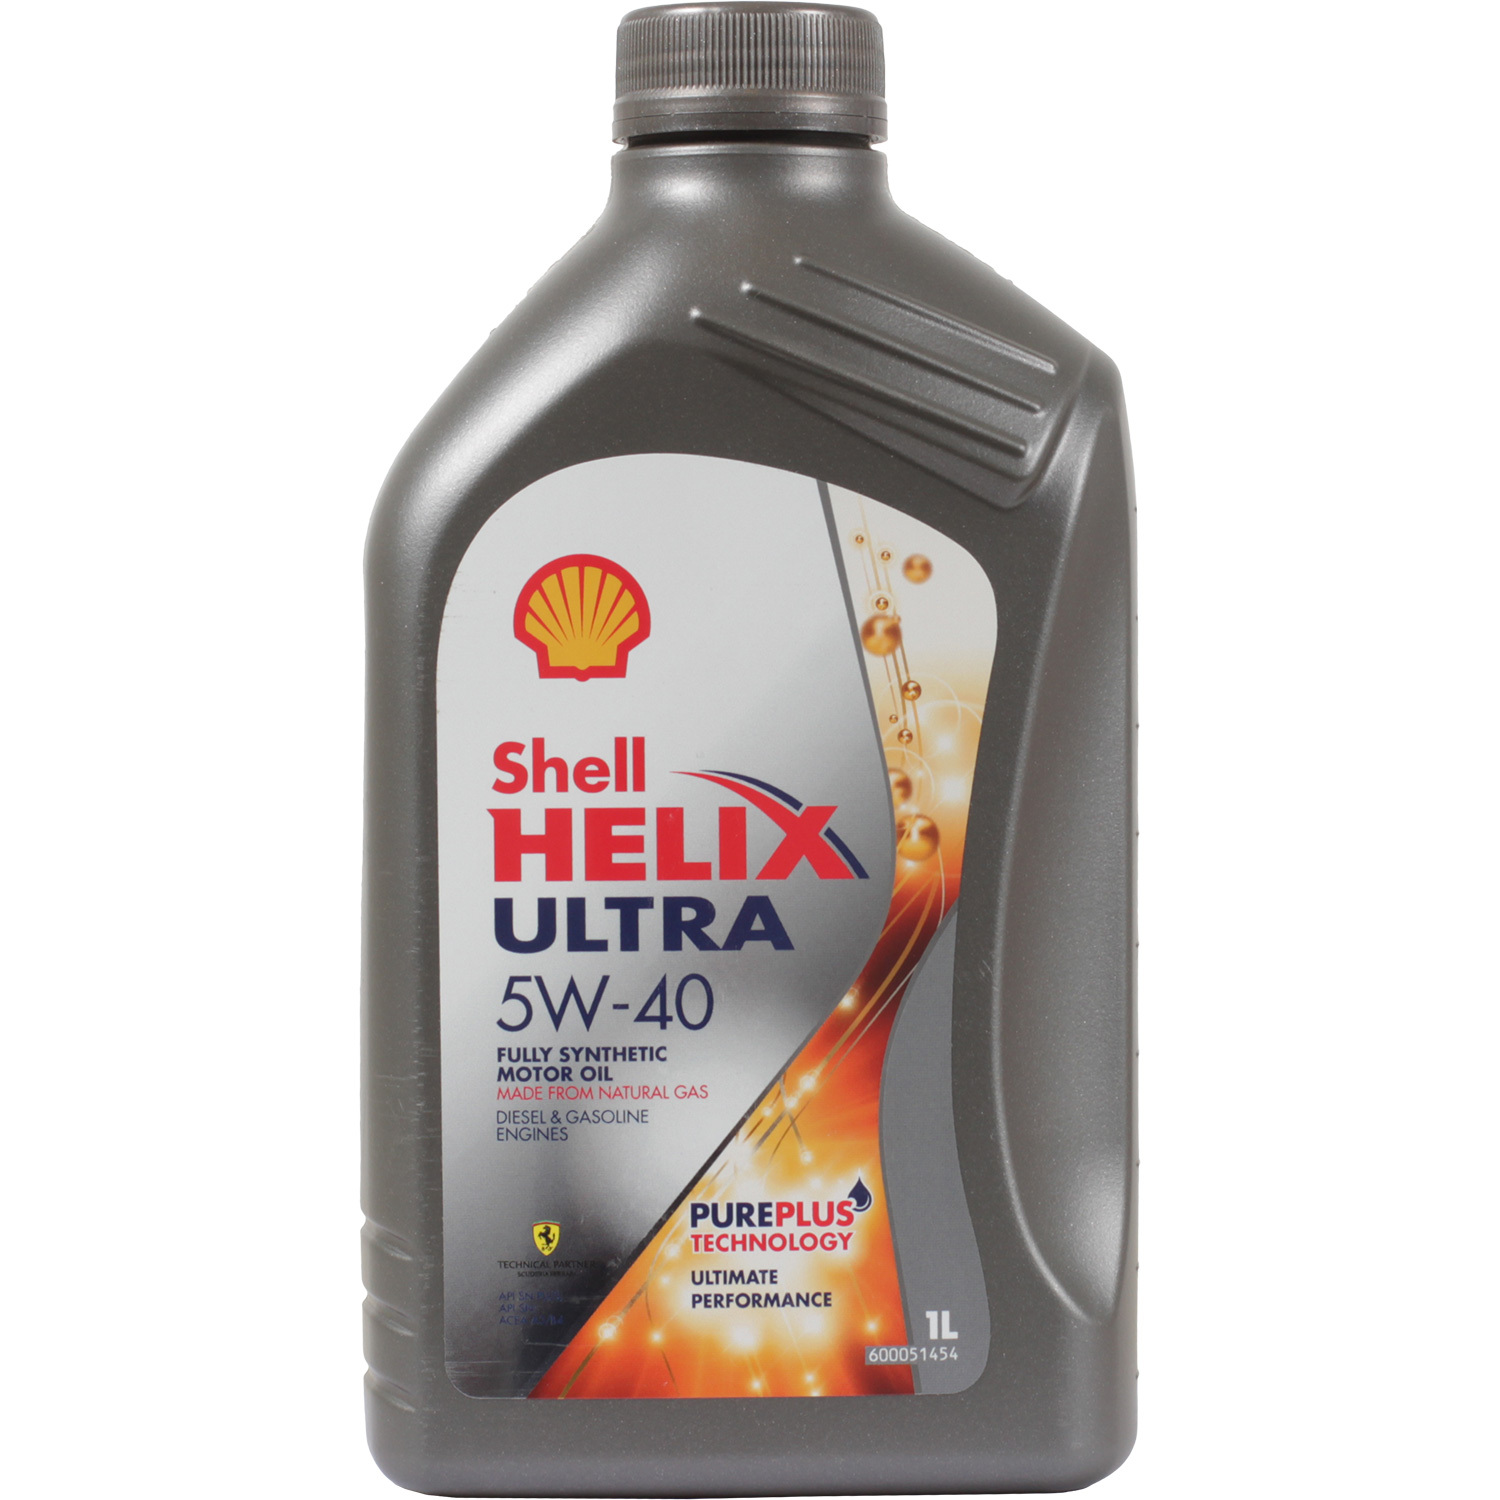 Shell Моторное масло Shell Helix Ultra 5W-40, 1 л моторное масло shell helix hx8 ect 5w 30 4 л синтетическое